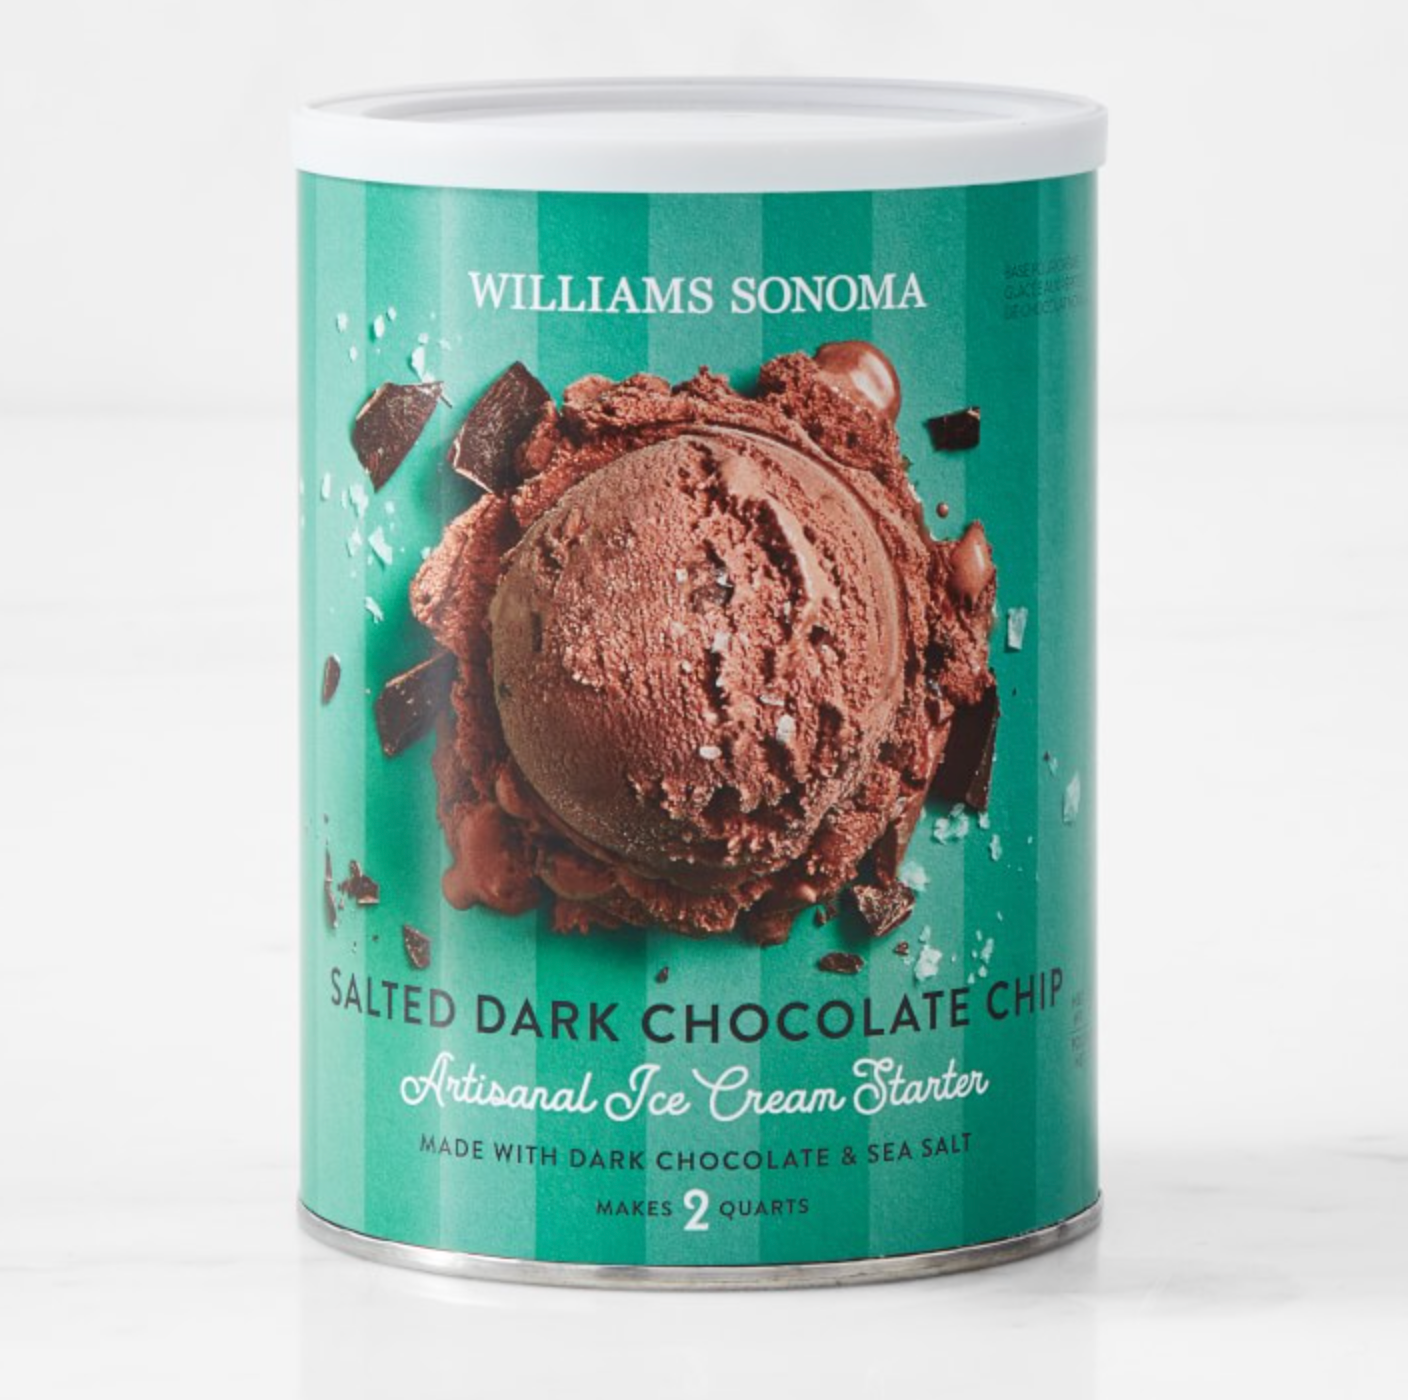 Williams Sonoma Ice Cream Starter, Chocolate